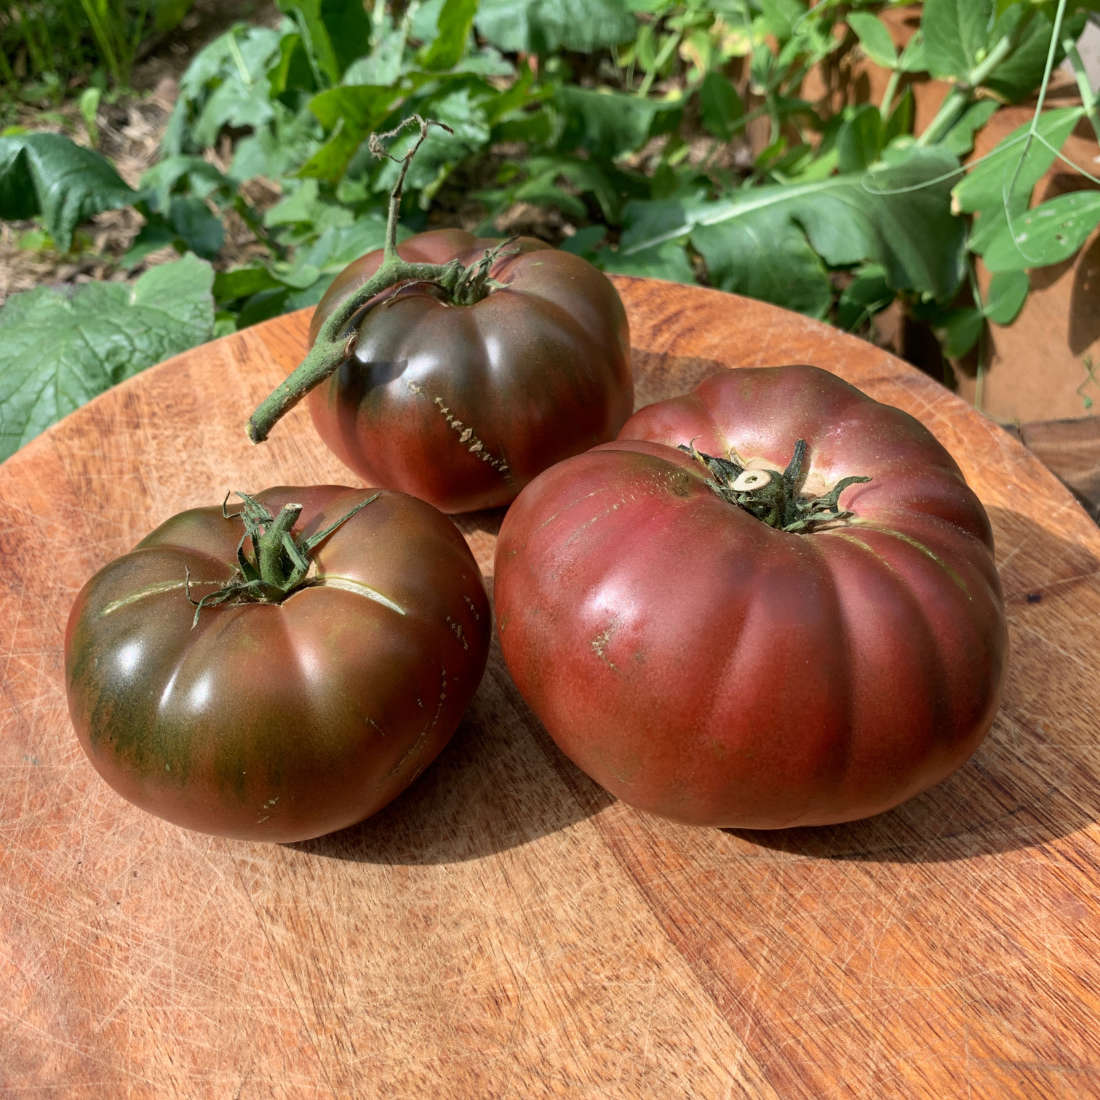 Black Krim Tomato Seeds buy online